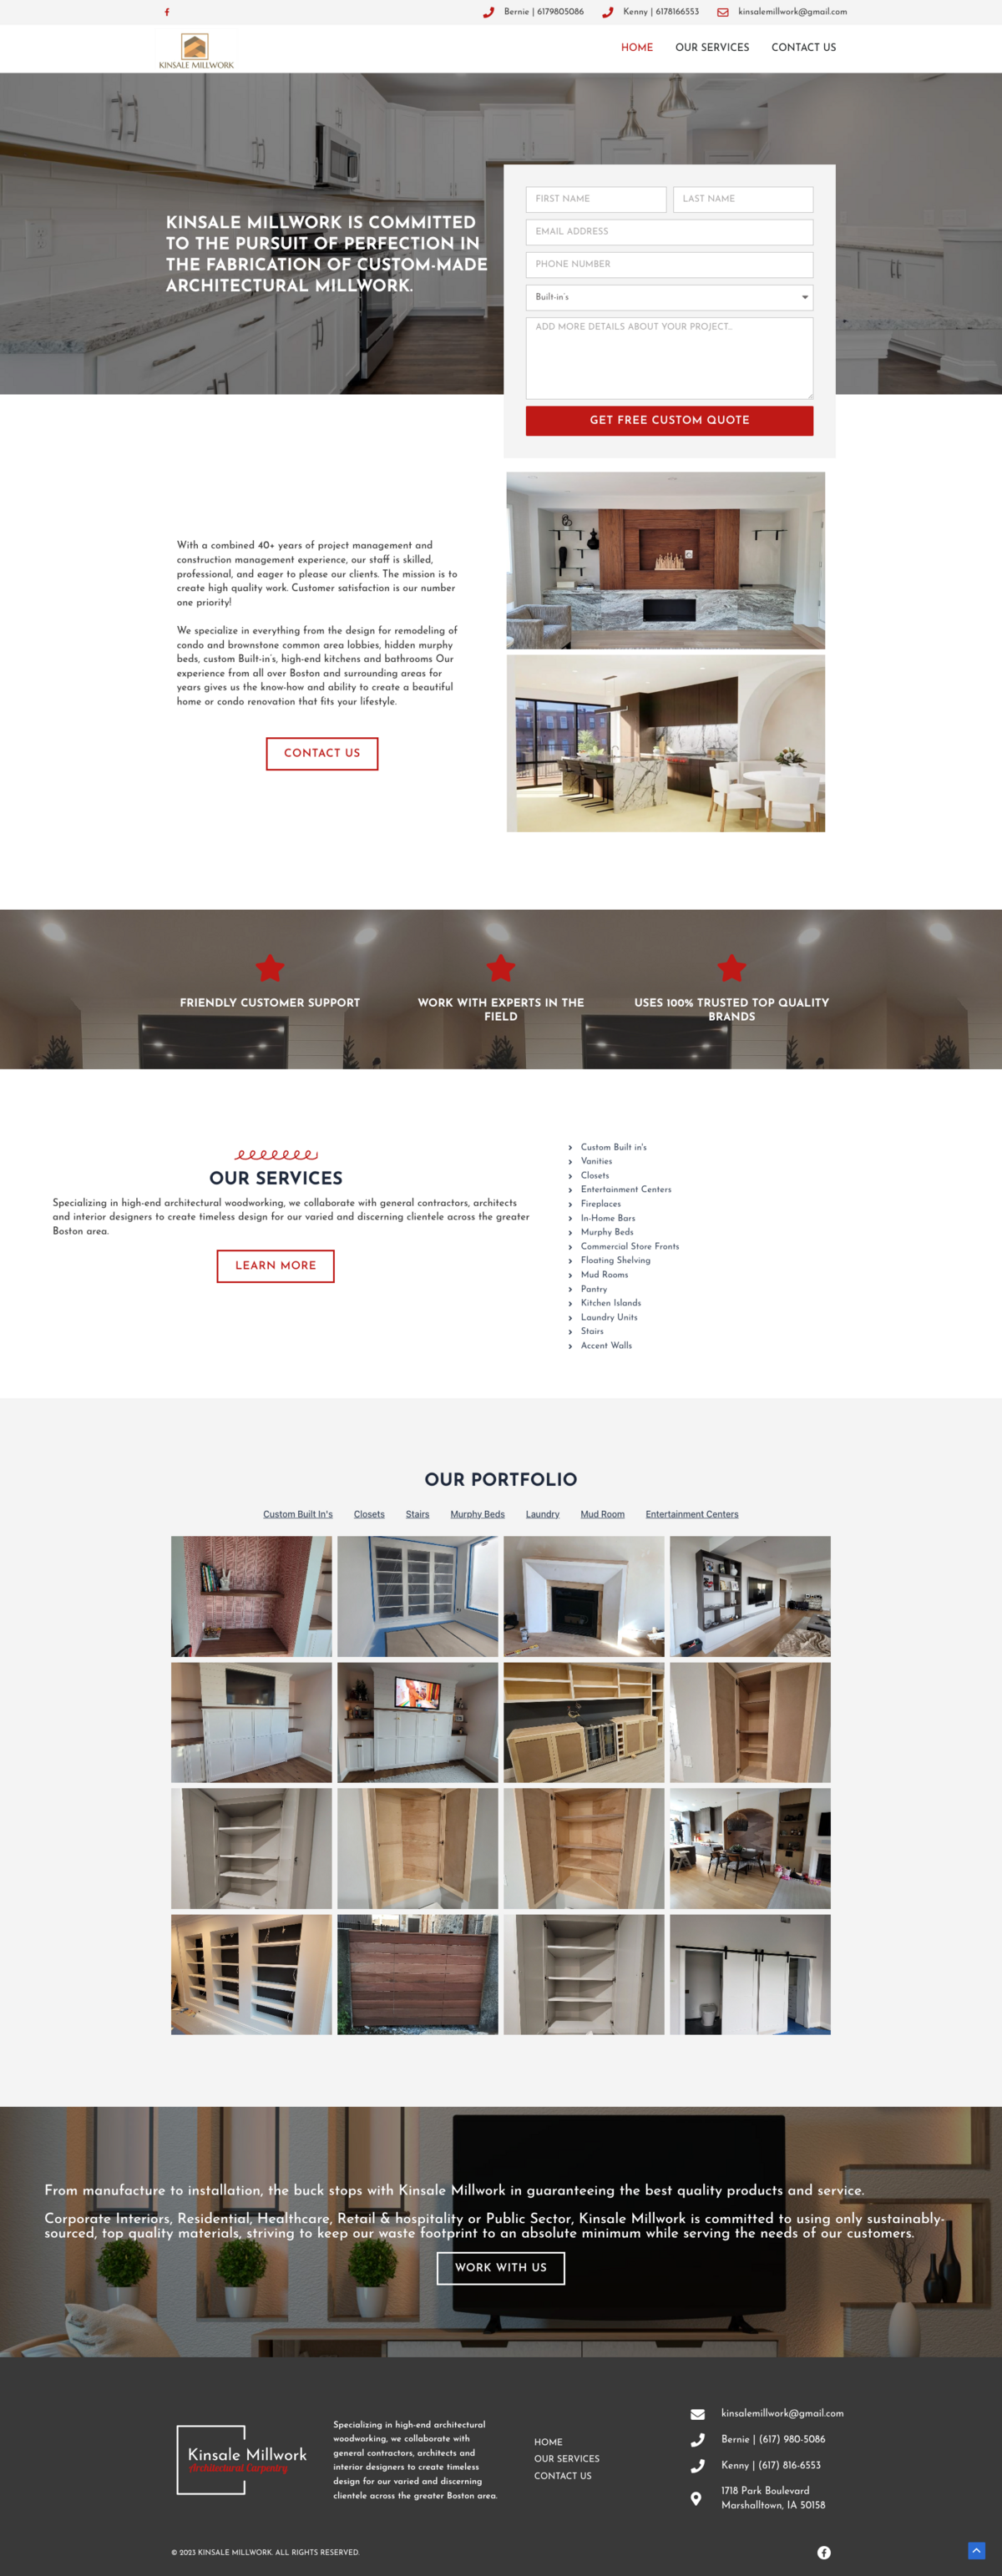 dainty-creative-co-portfolio-construction-kinsale-millwork-mockup-custom-website-design-seo